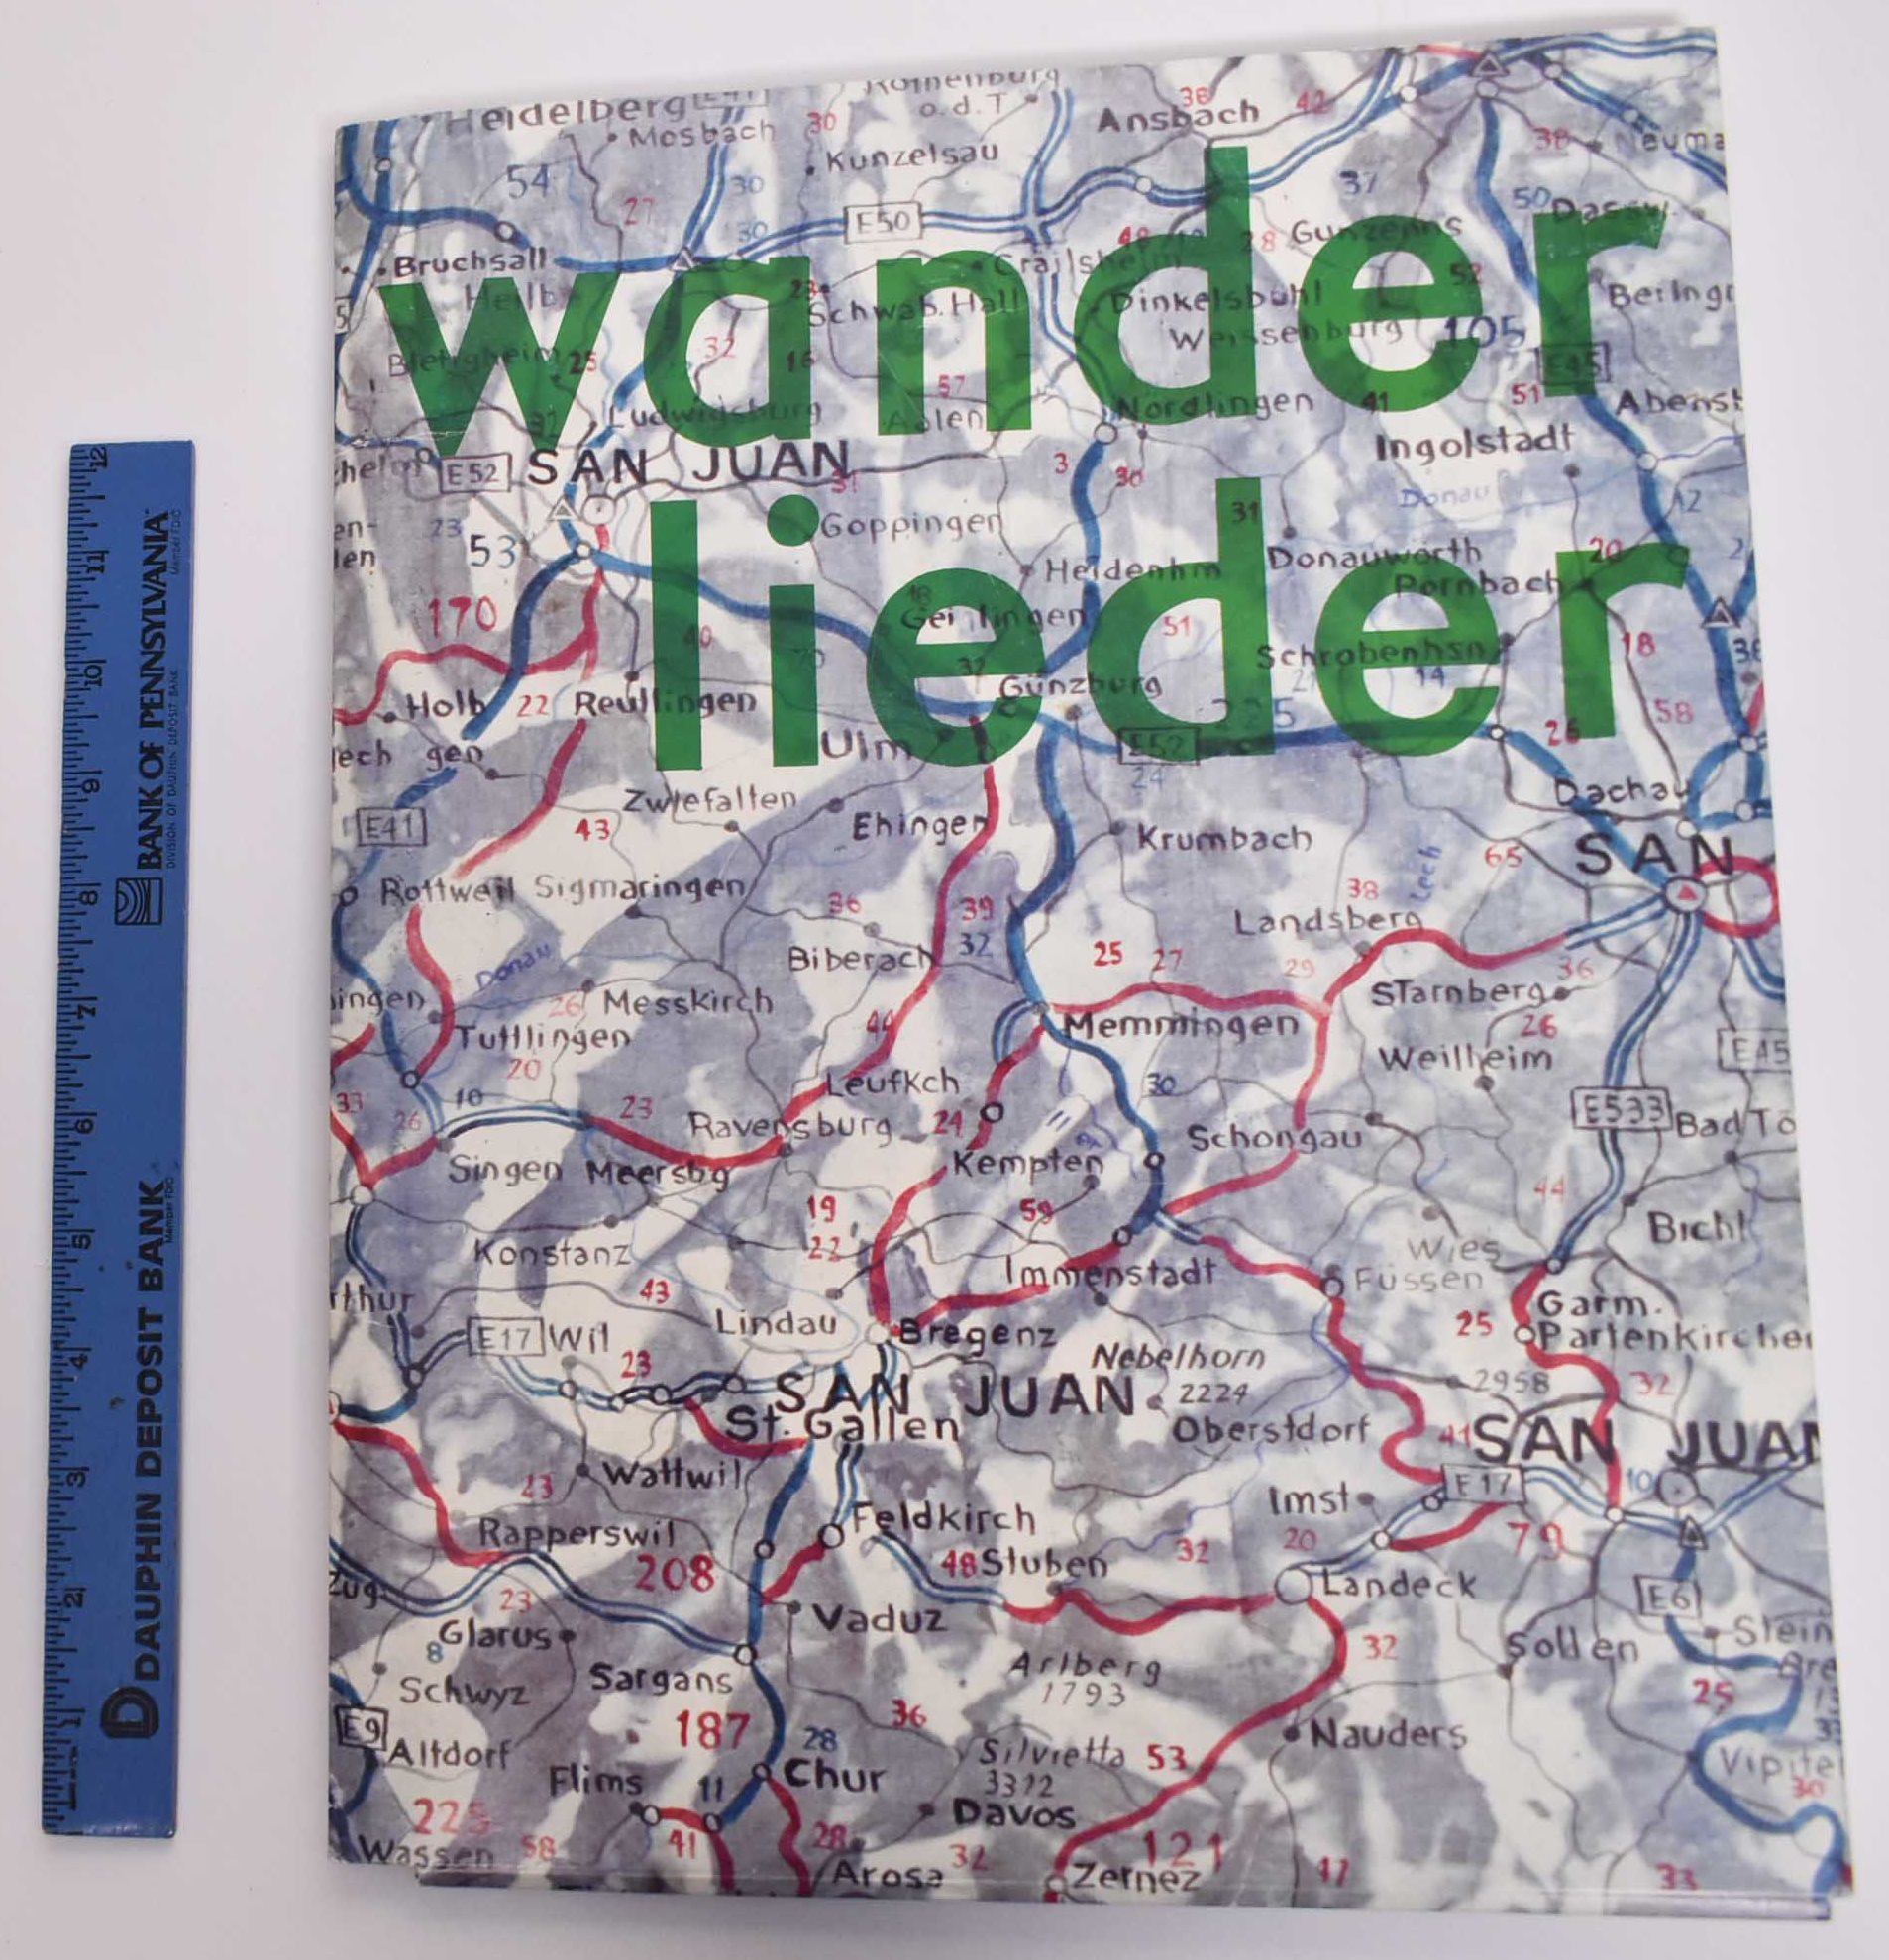 Wanderlieder: Edelijk Museum, Museum of Modern Art, Amsterdam 8-12-1991 - 9-2-1991 - Cohen, M.